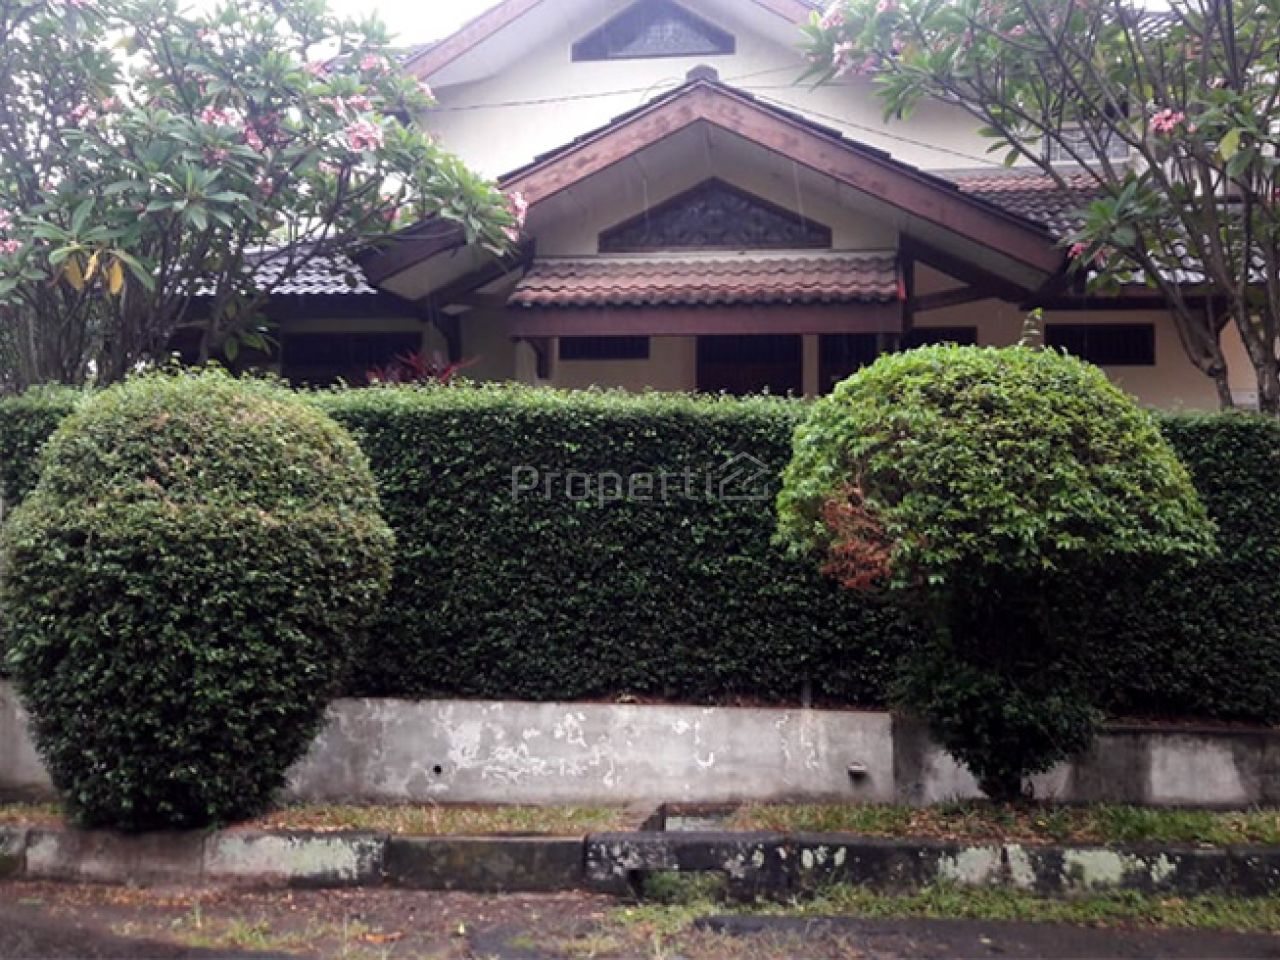 Rumah Hook 2 Lantai dengan Taman Depan & Belakang di Lebak Bulus, DKI Jakarta